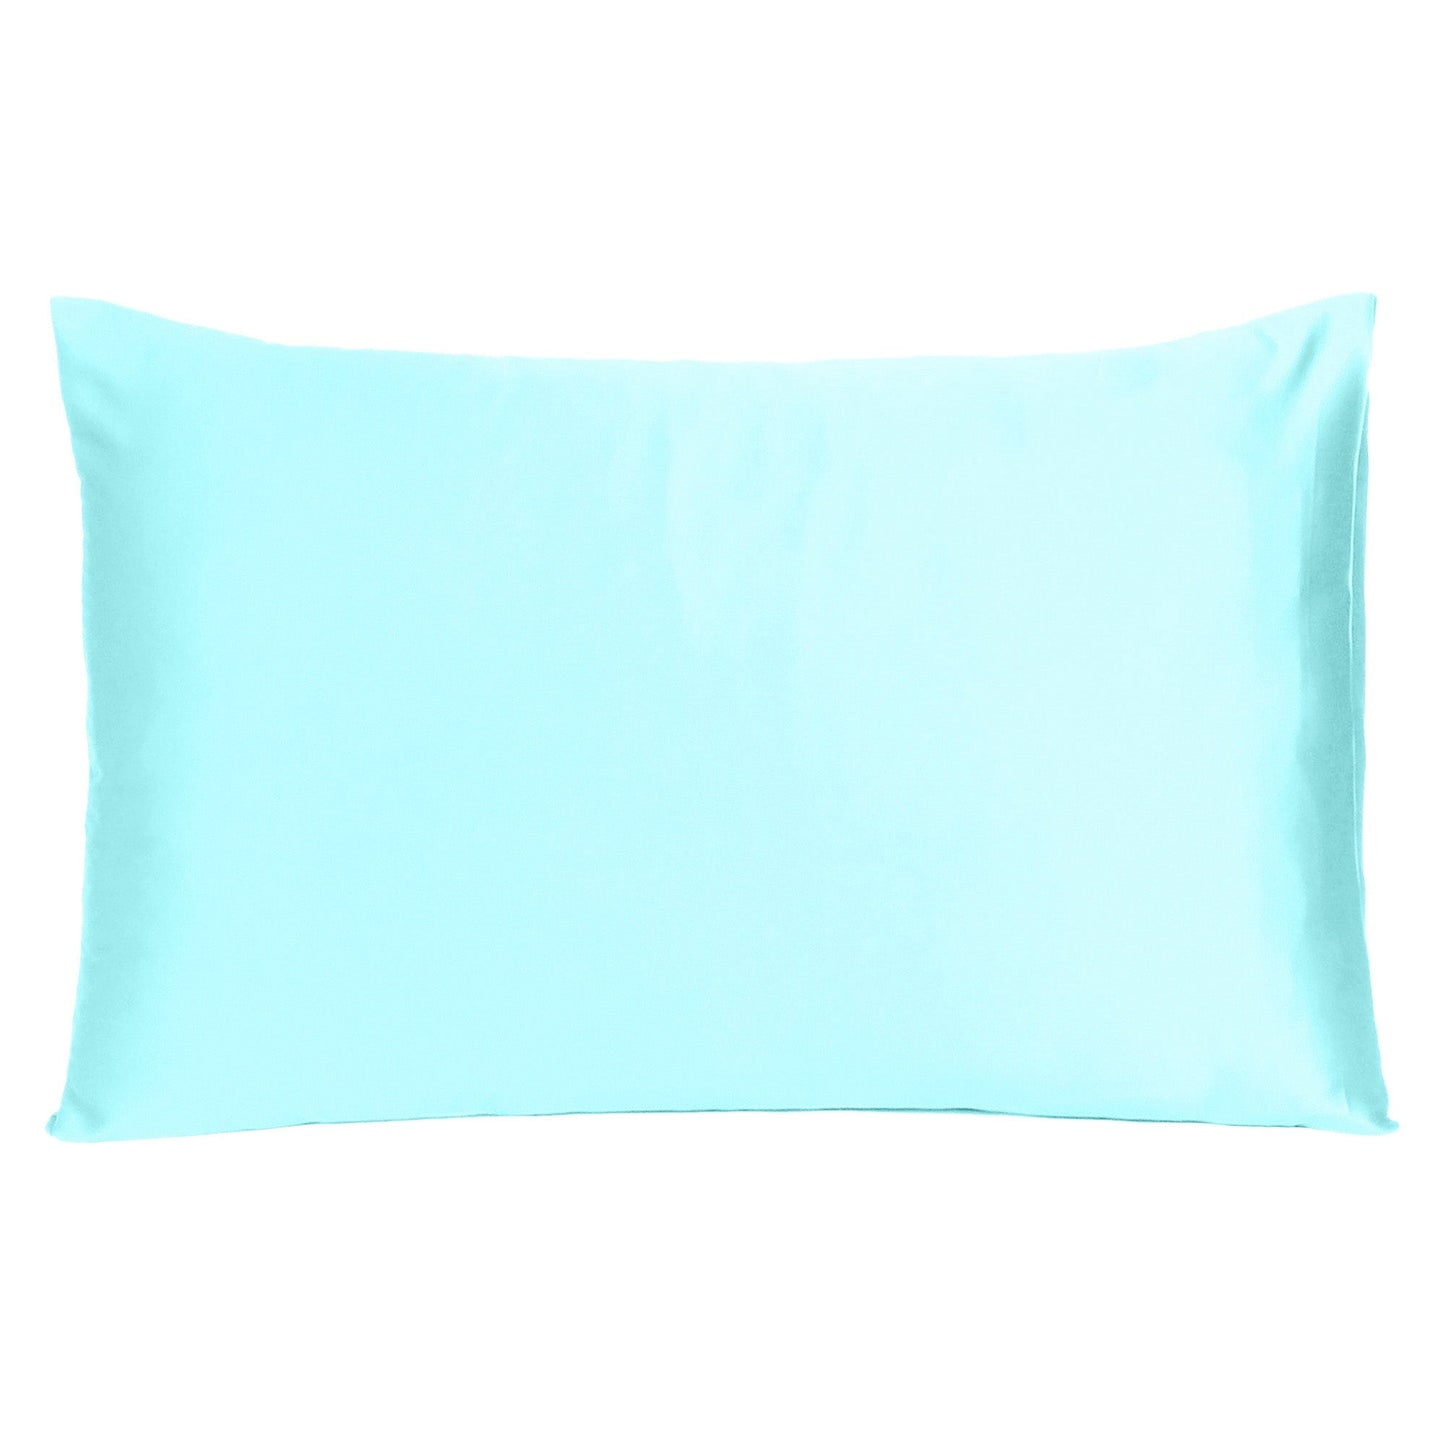 Luxury Soft Plain Satin Silk Pillowcases in Set of 2 - Pastel Blue